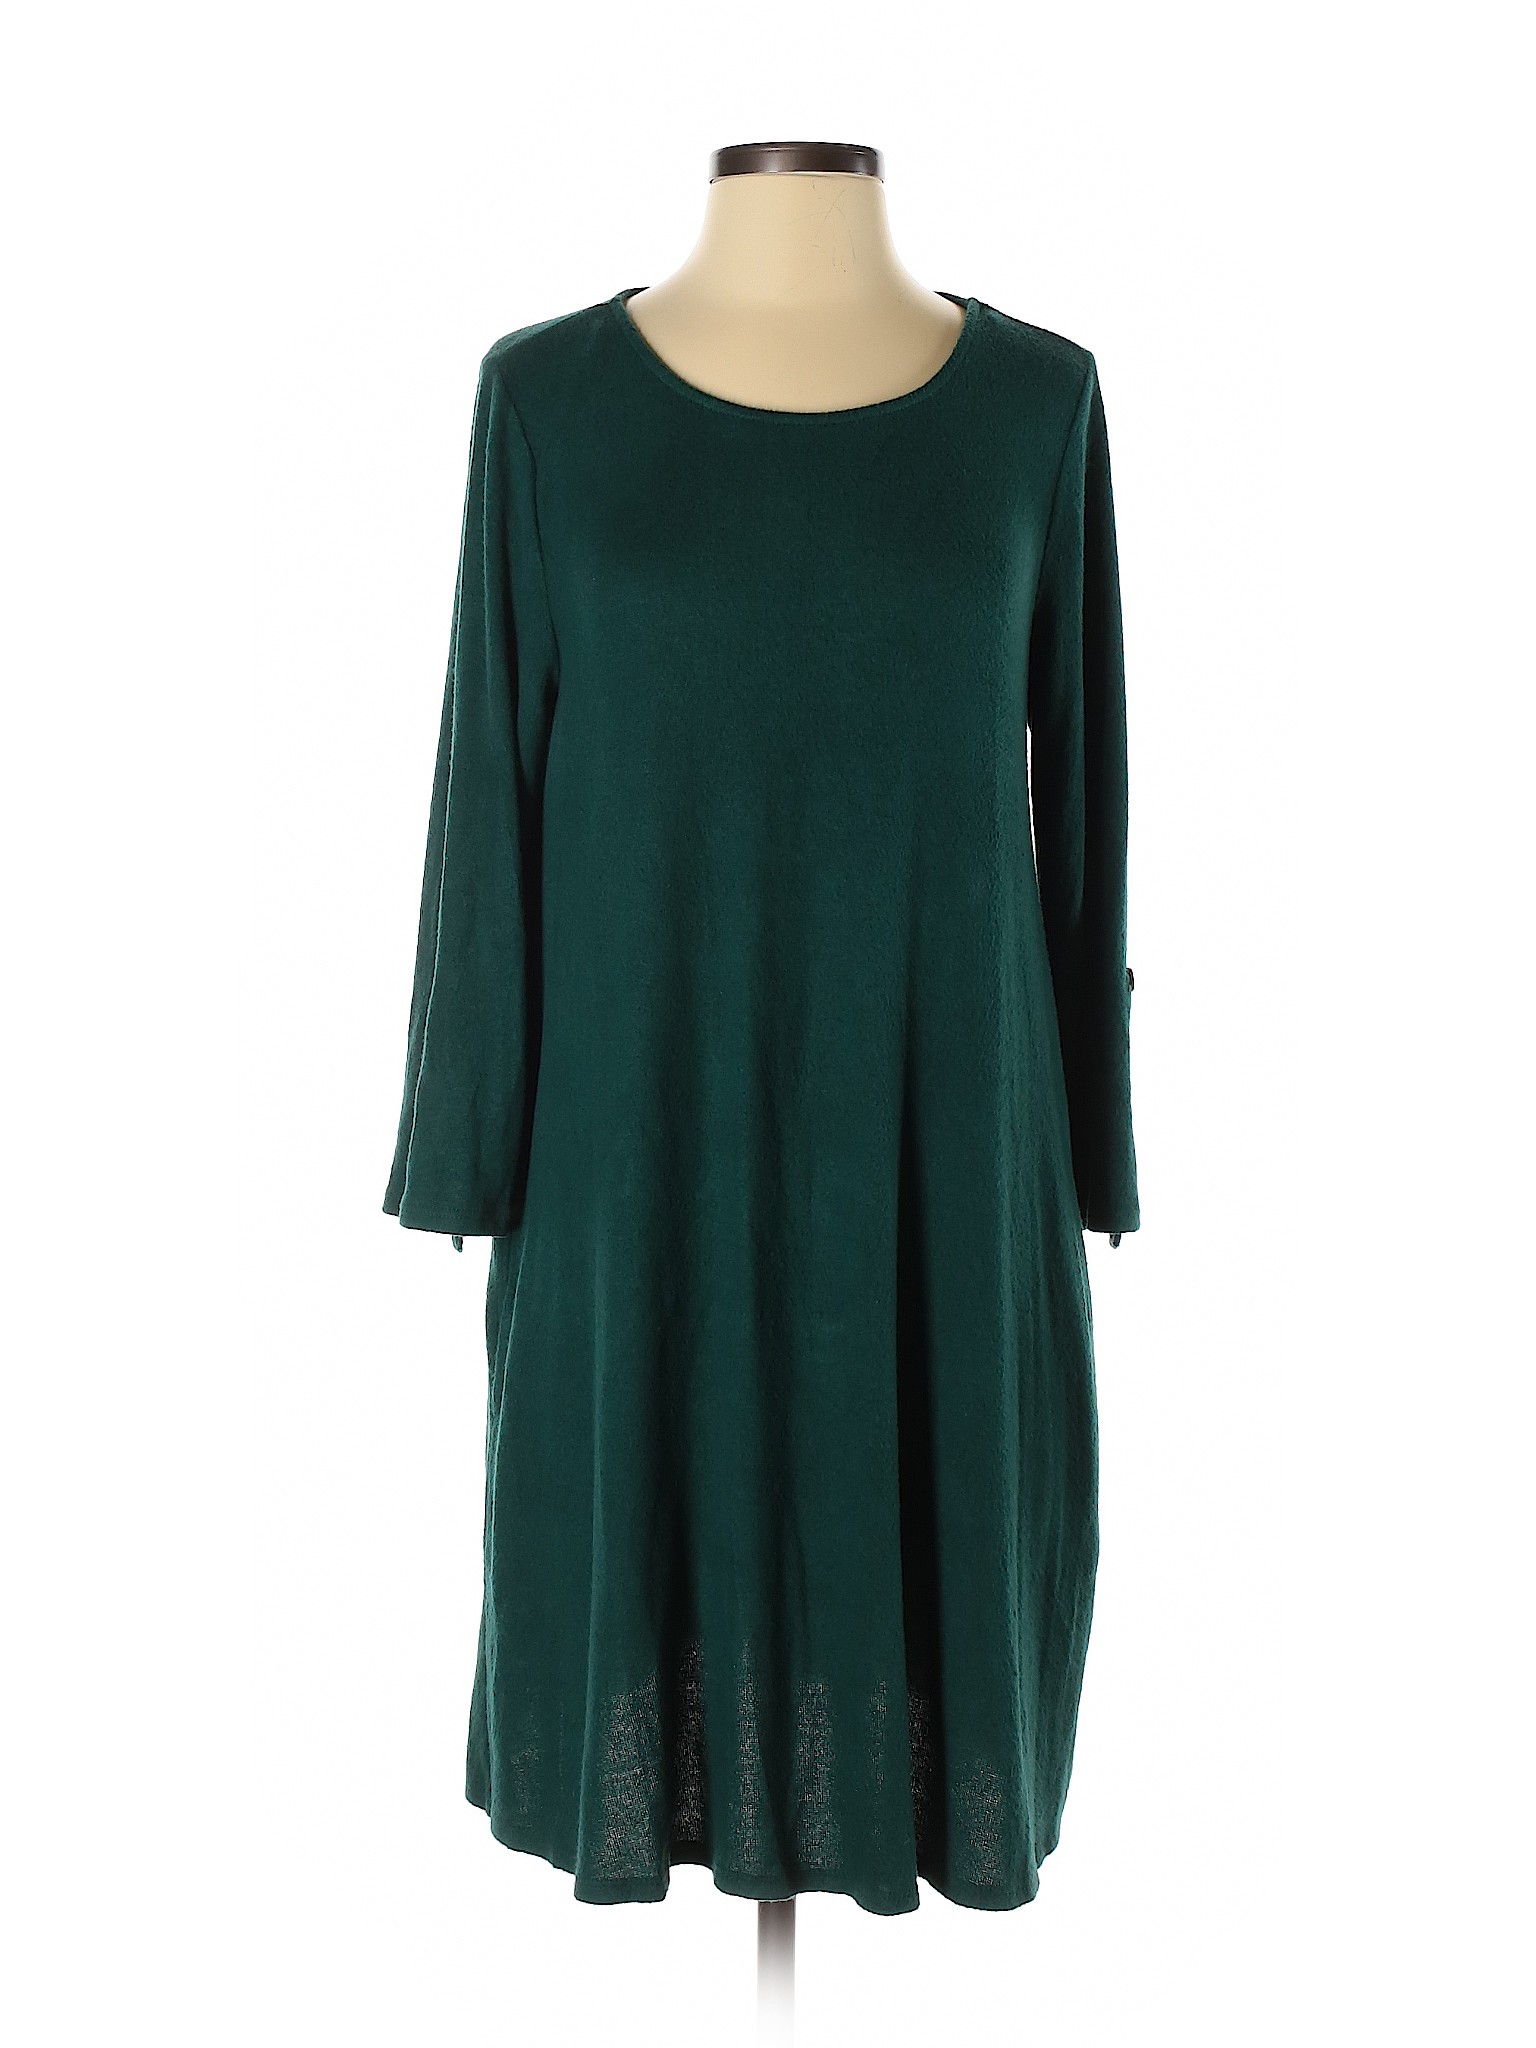 Apt. 9 Women Green Casual Dress M | eBay